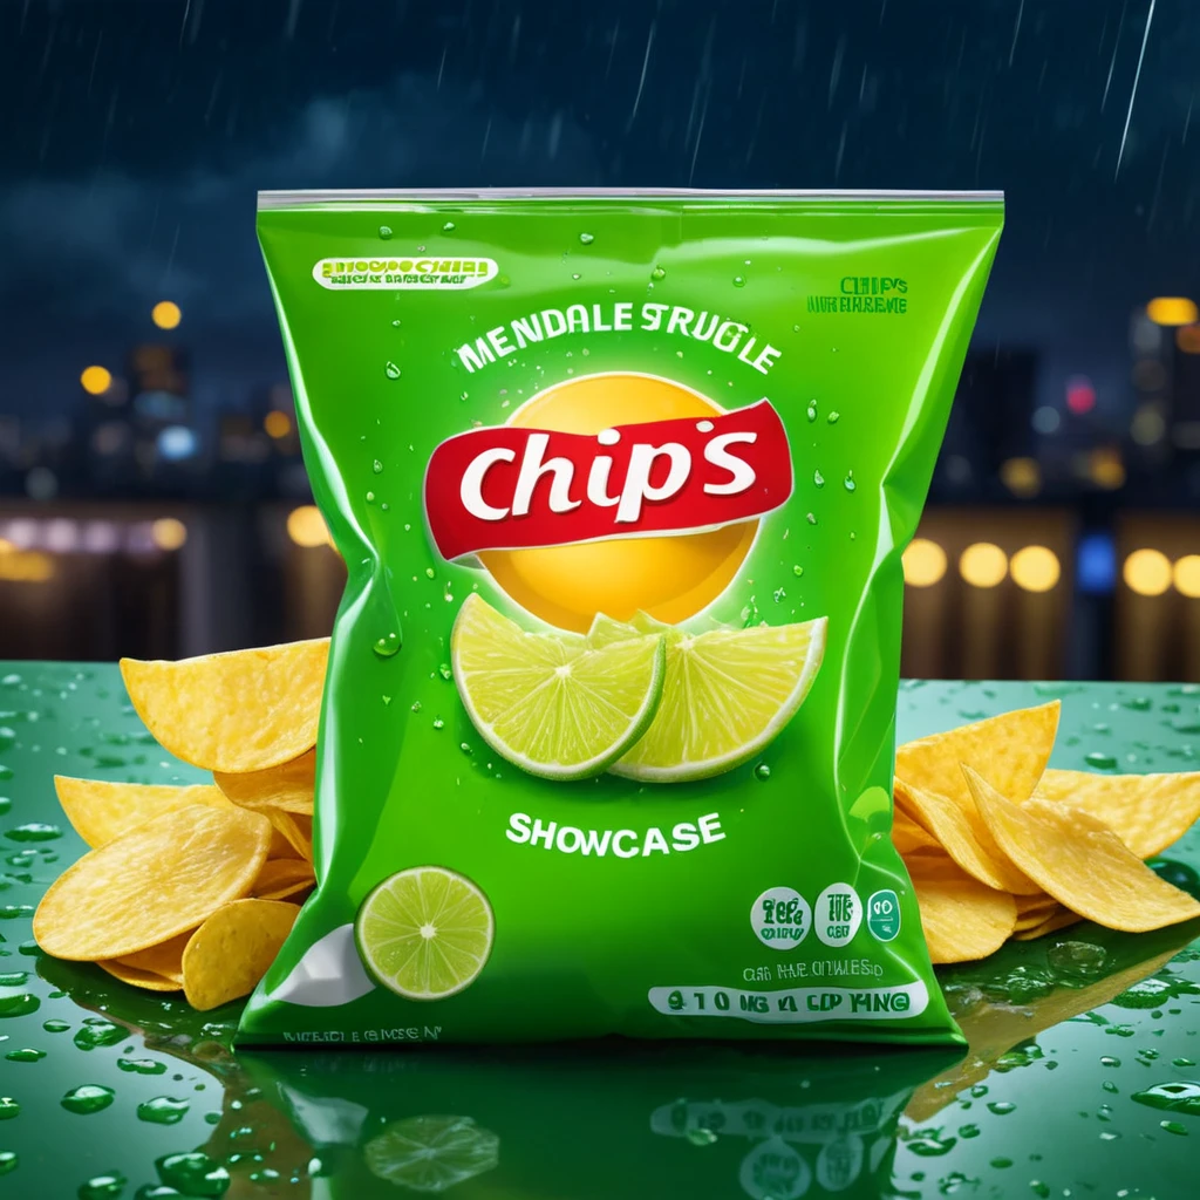 (chips bag showcase) <lora:56_chips_bag_showcase:1.1>
Lime background,
high quality, professional, highres, amazing, drama...